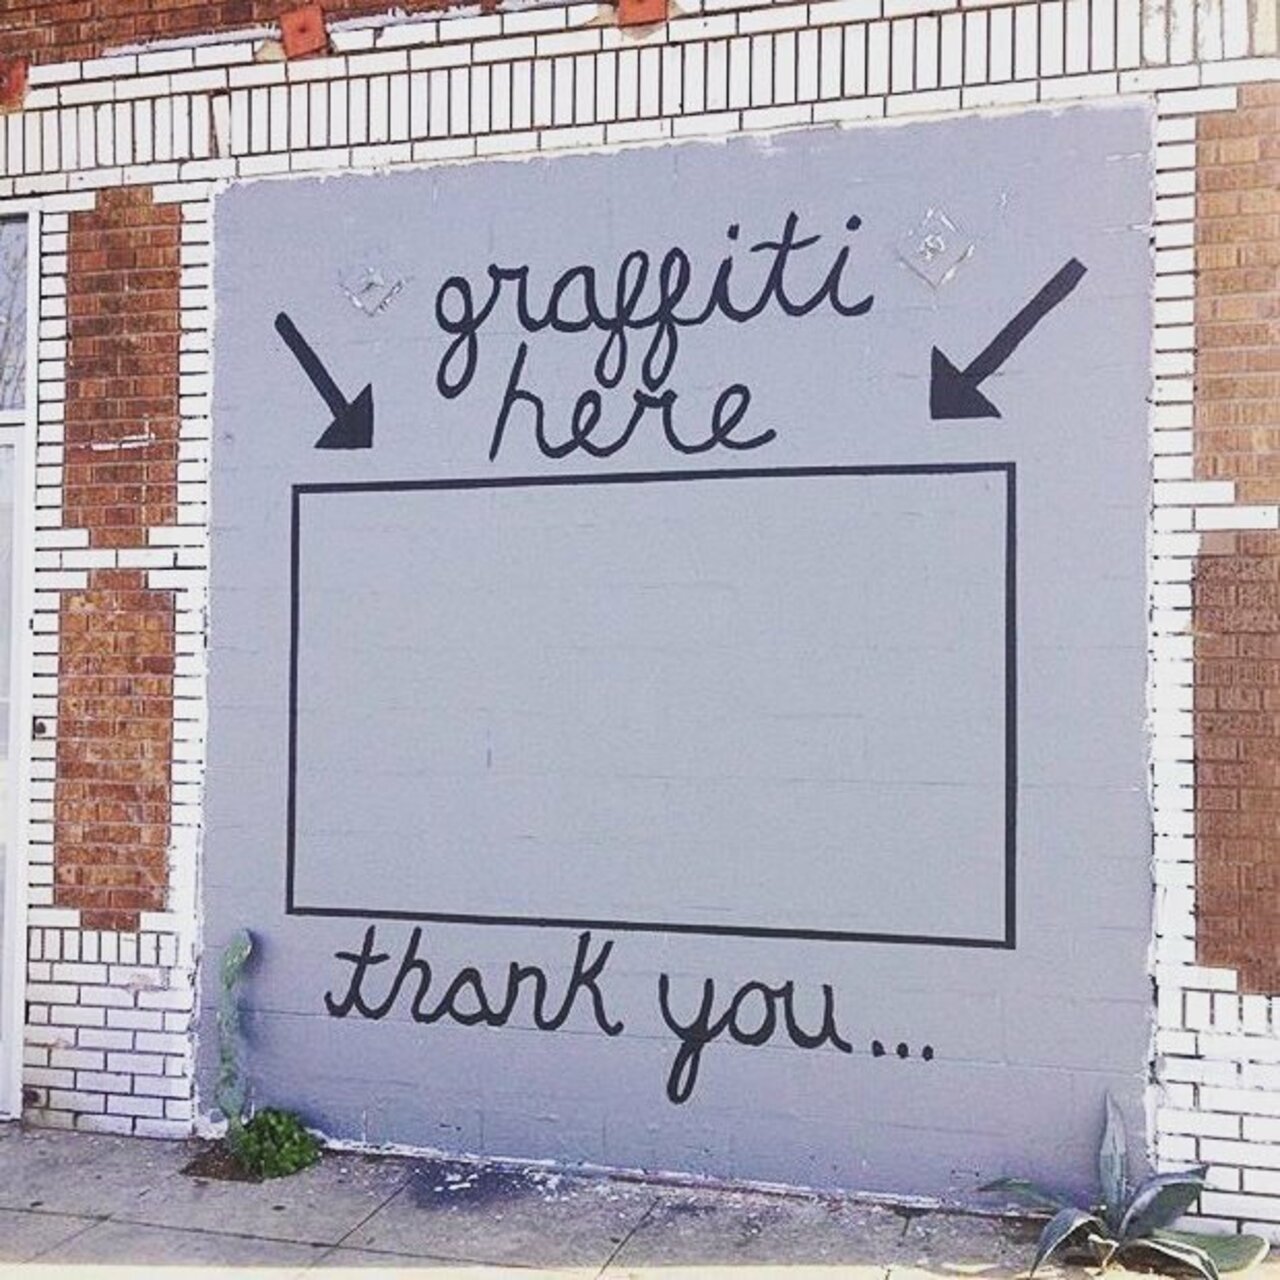 Street Art Culture – Thank you #streetart #graffiti #art #smart #cool | GLOB▲L - M▲G▲ZINE https://beartistbeart.com/2016/03/30/street-art-culture-thank-you/ https://t.co/6ll13g3Azz